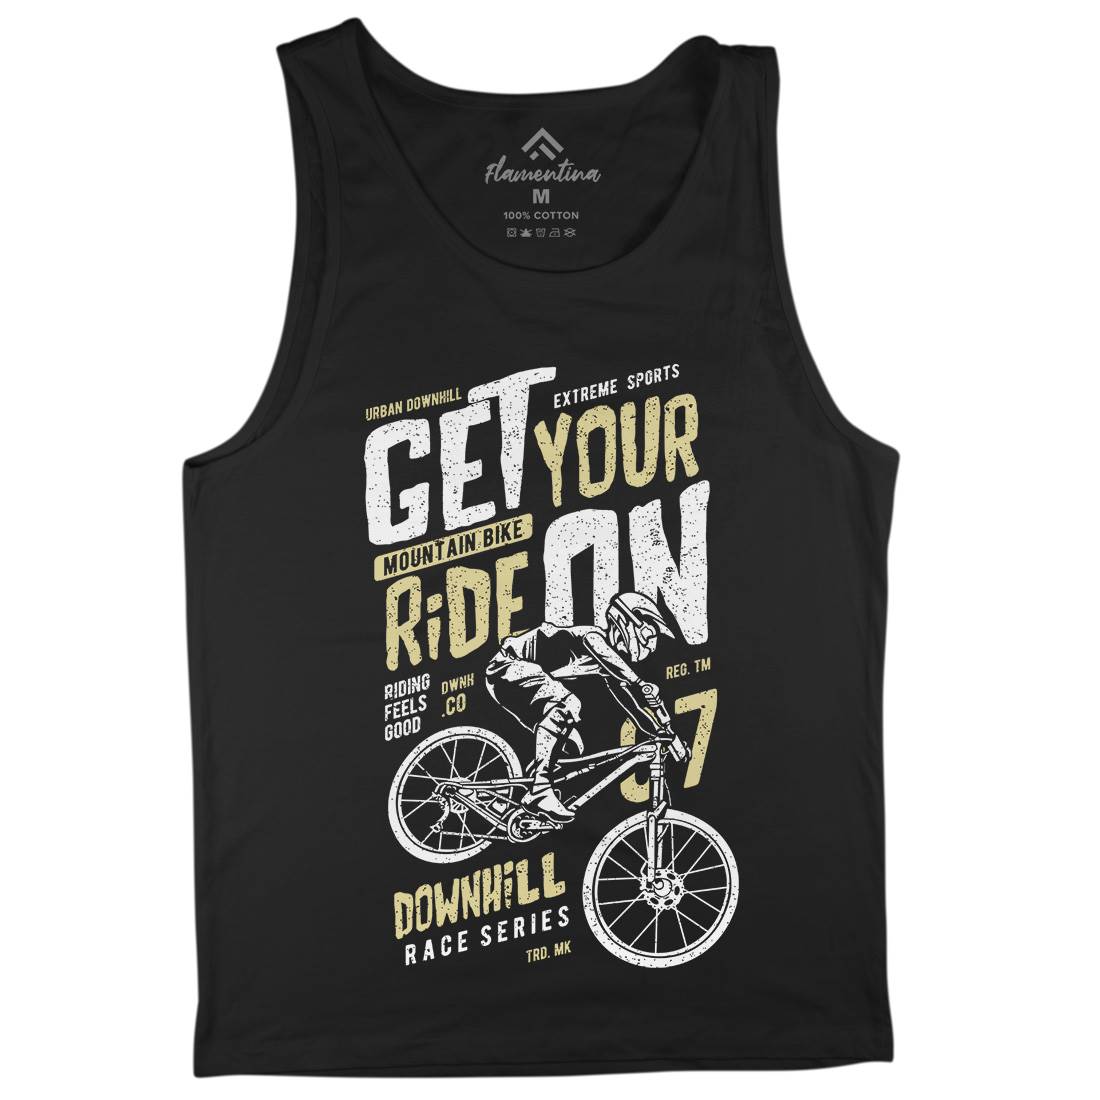 Get Your Ride Mens Tank Top Vest Bikes A673